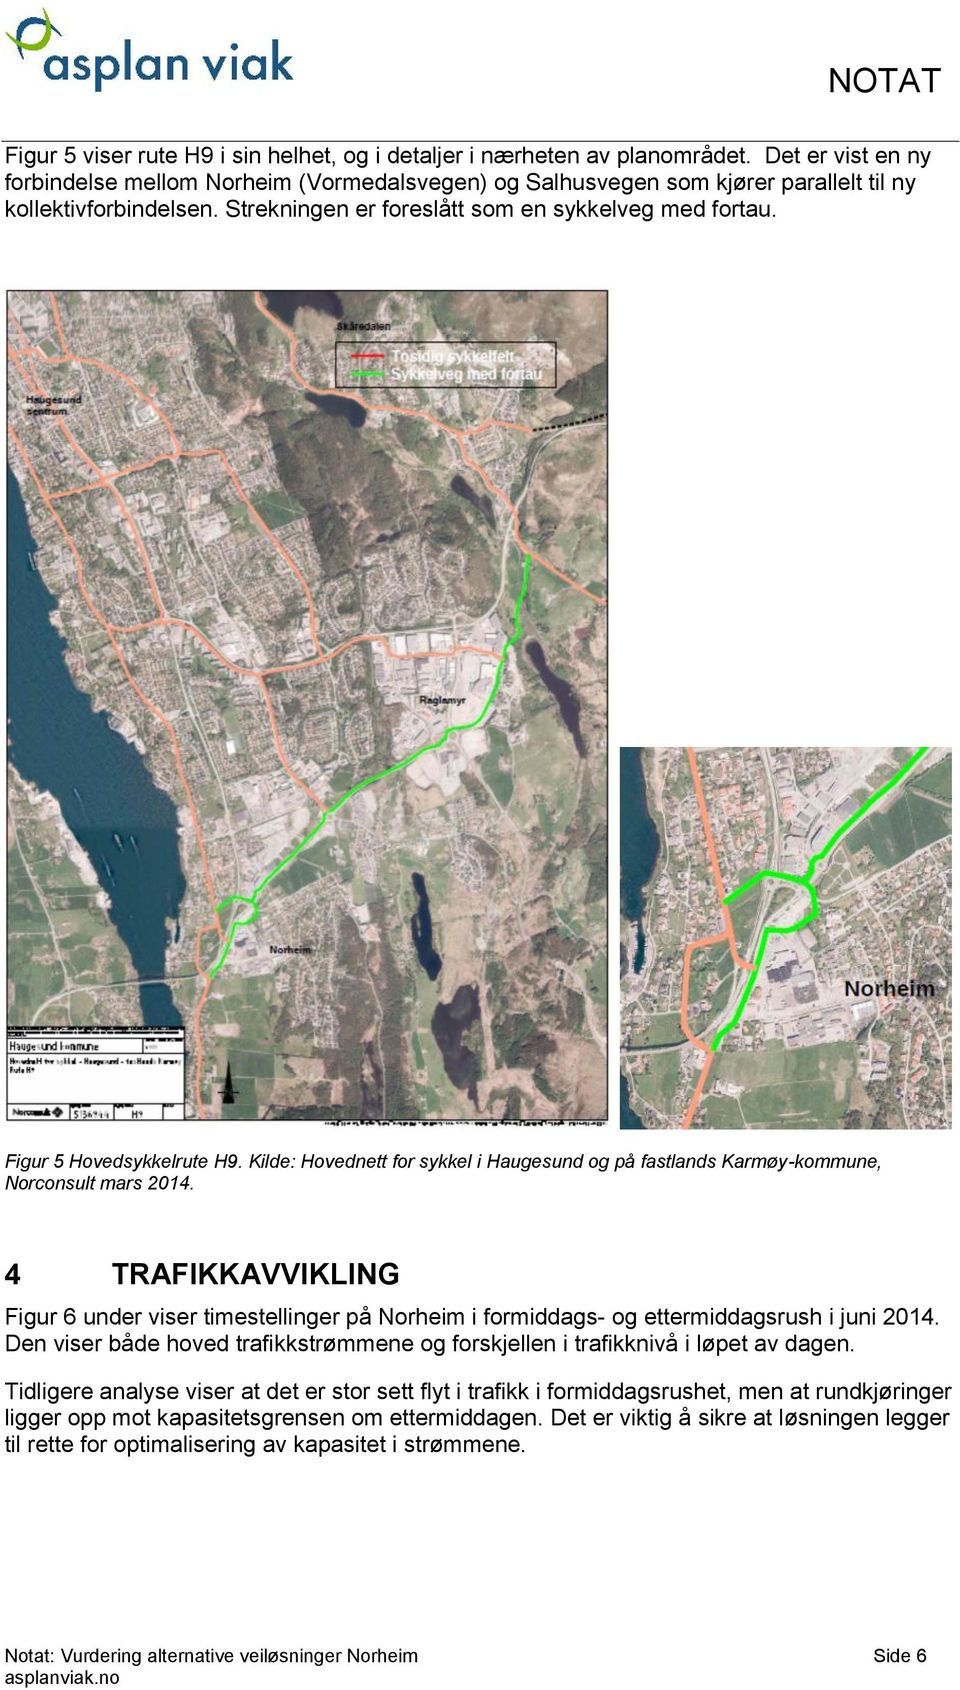 Figur 5 Hovedsykkelrute H9. Kilde: Hovednett for sykkel i Haugesund og på fastlands Karmøy-kommune, Norconsult mars 2014.